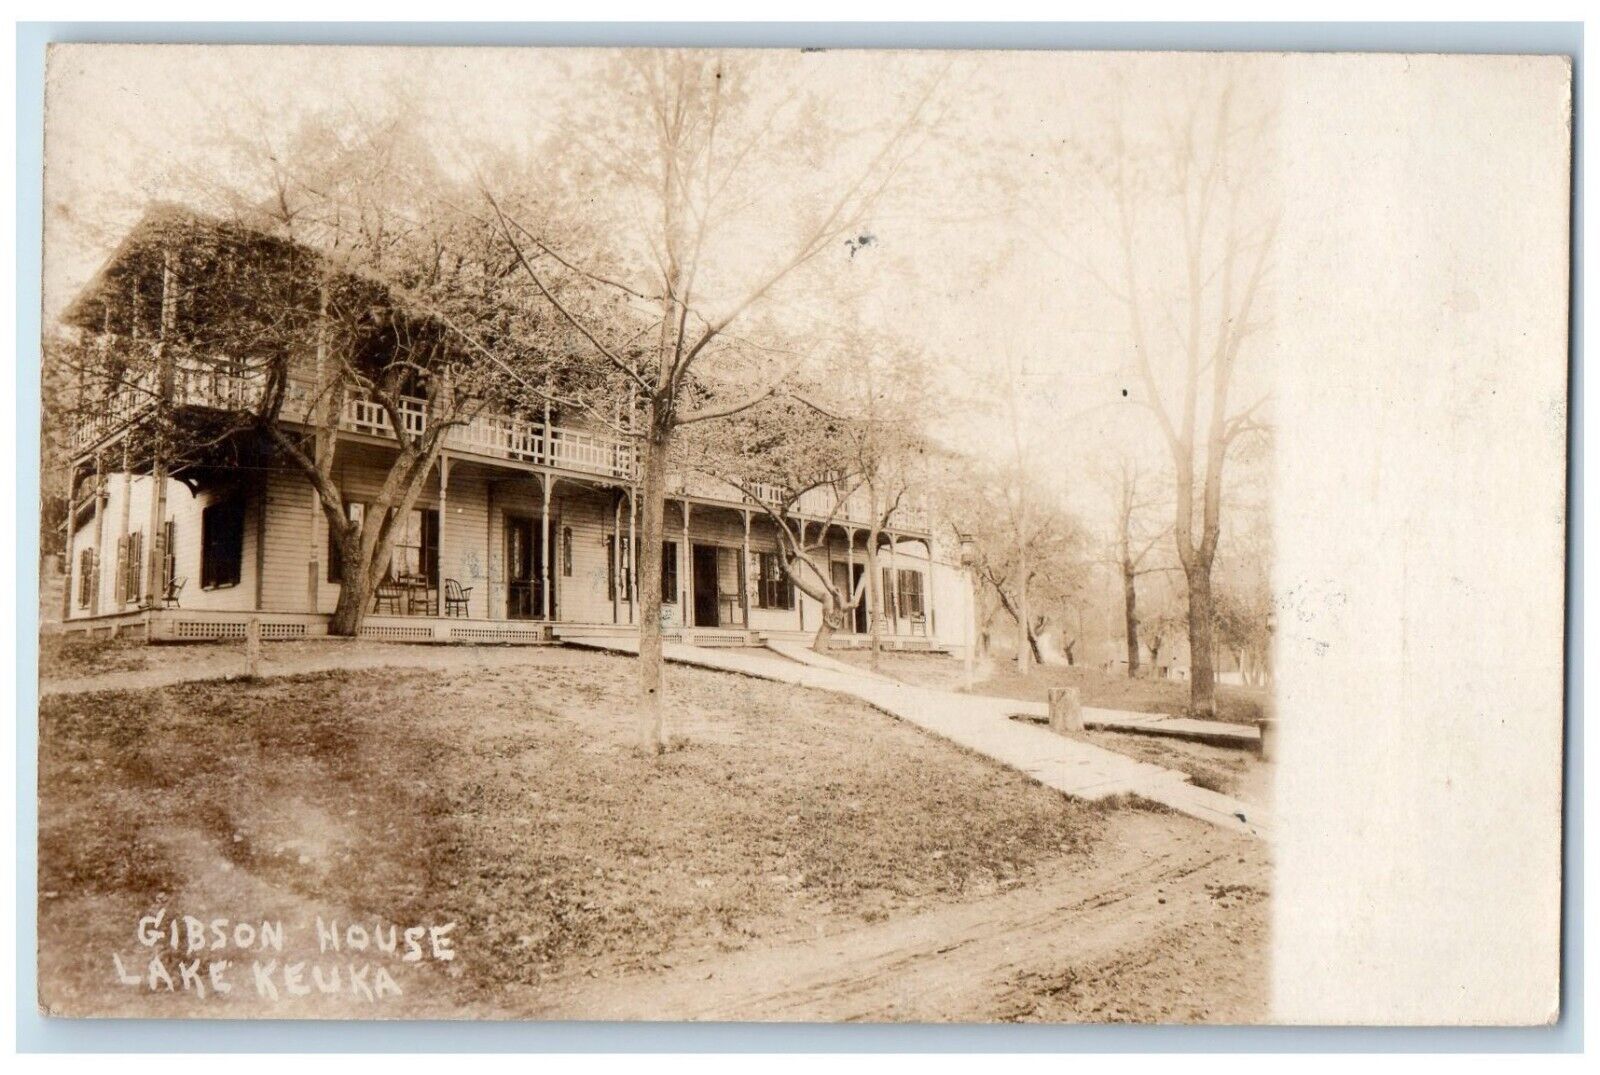 1907 Gibson House Lake Keuka Catawba New York NY RPPC Photo Antique Postcard